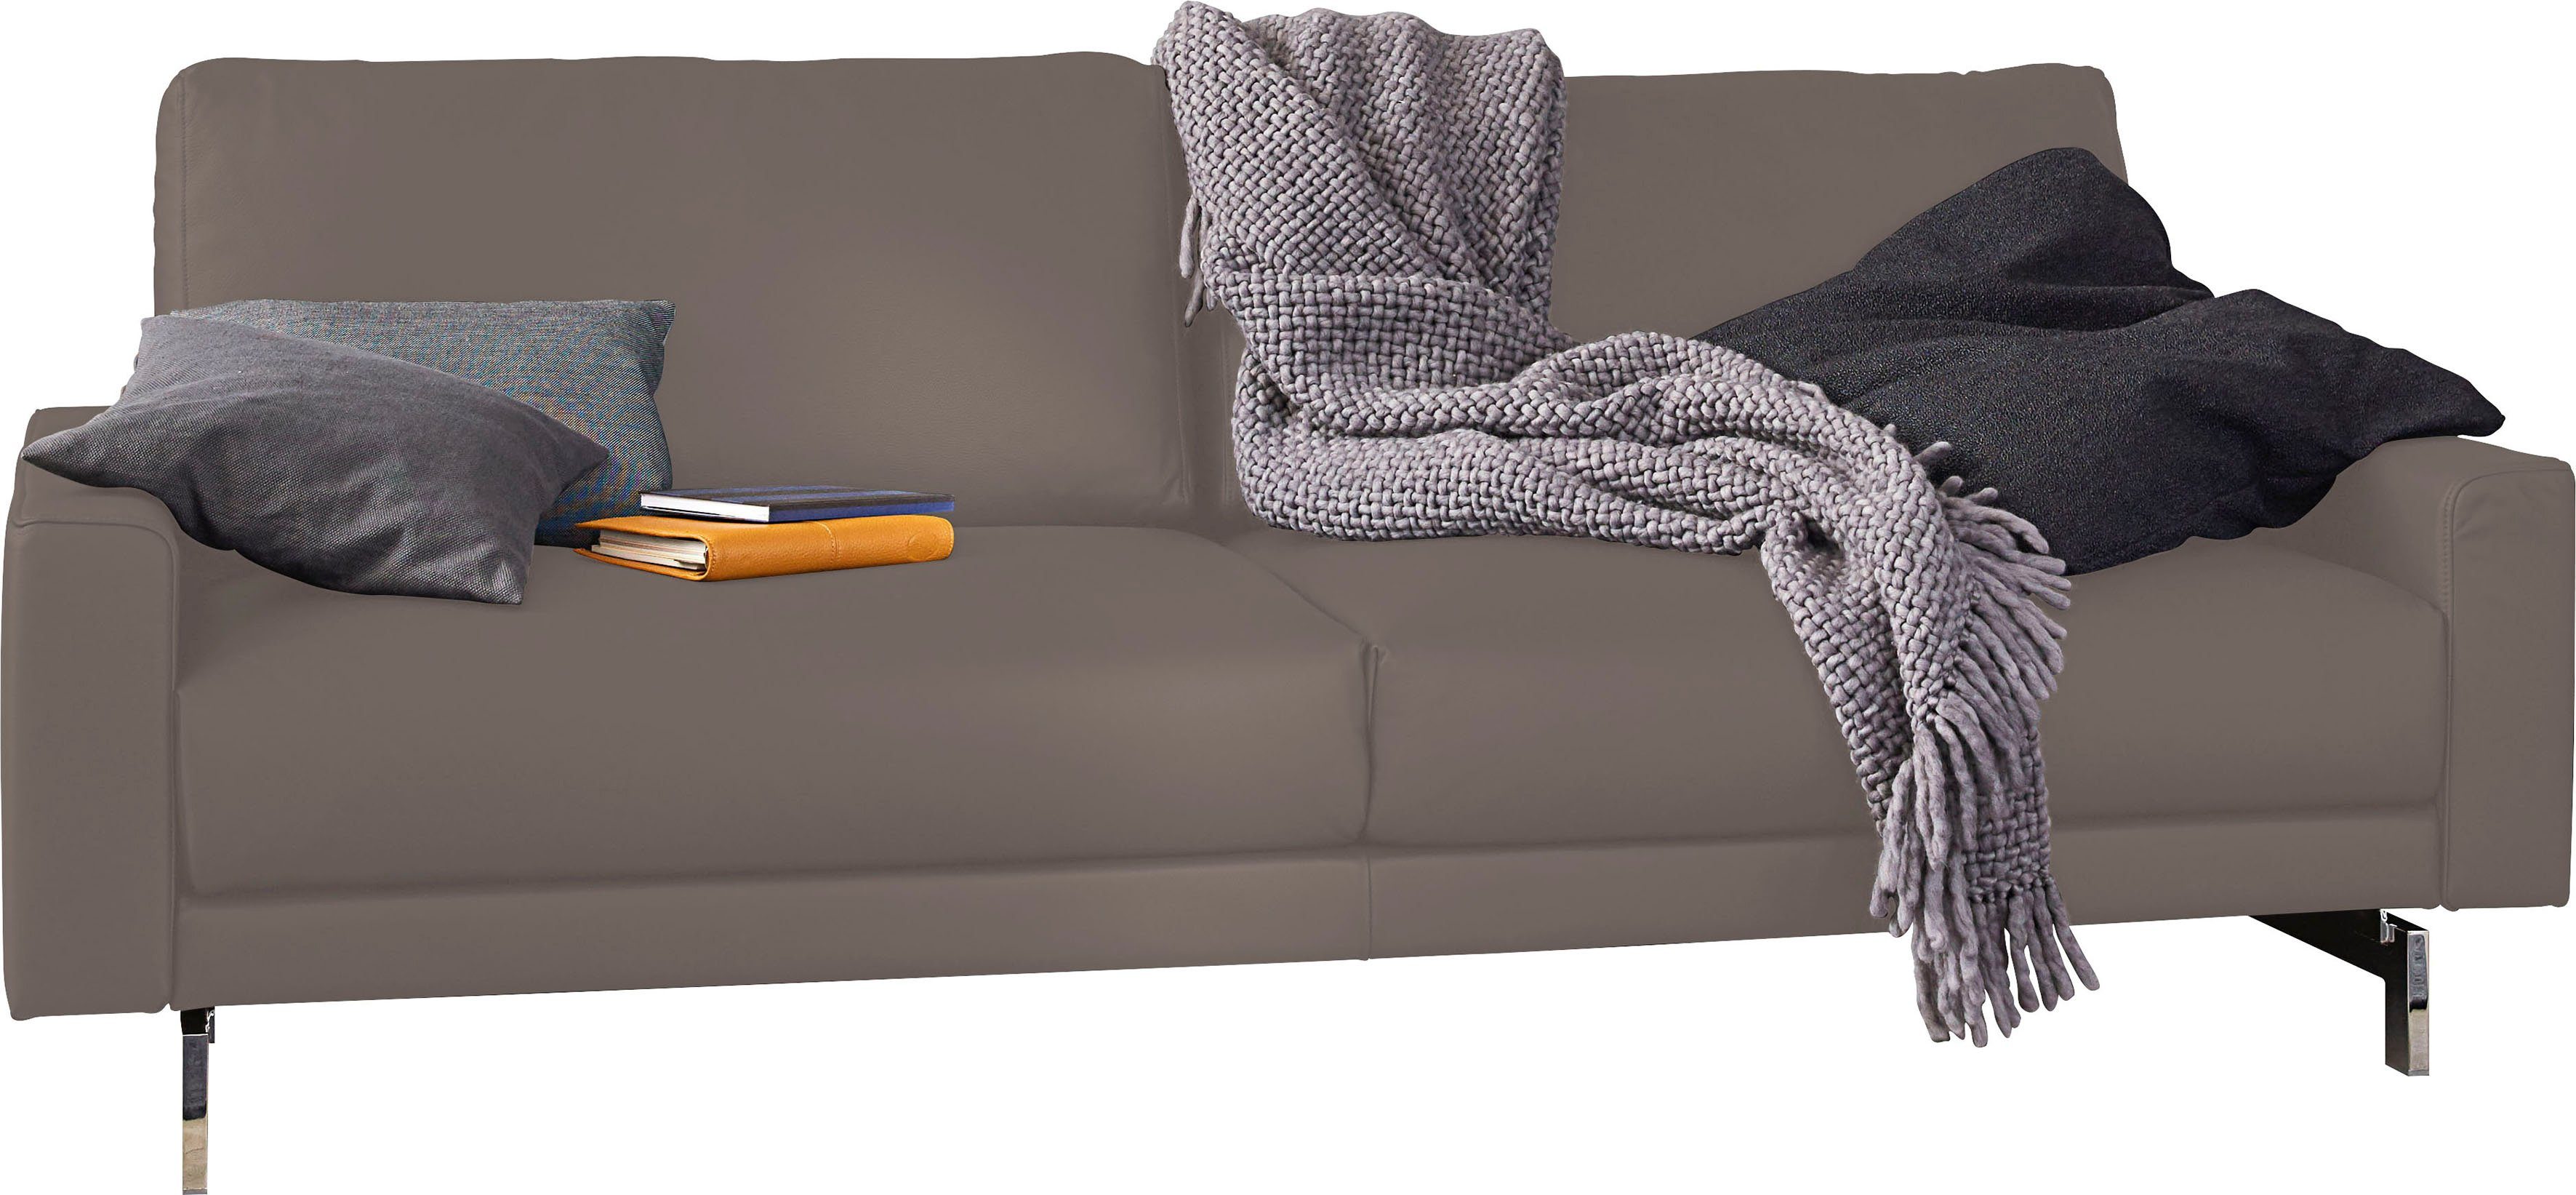 hs.450, niedrig, Fuß 164 cm Breite glänzend, hülsta sofa chromfarben 2-Sitzer Armlehne